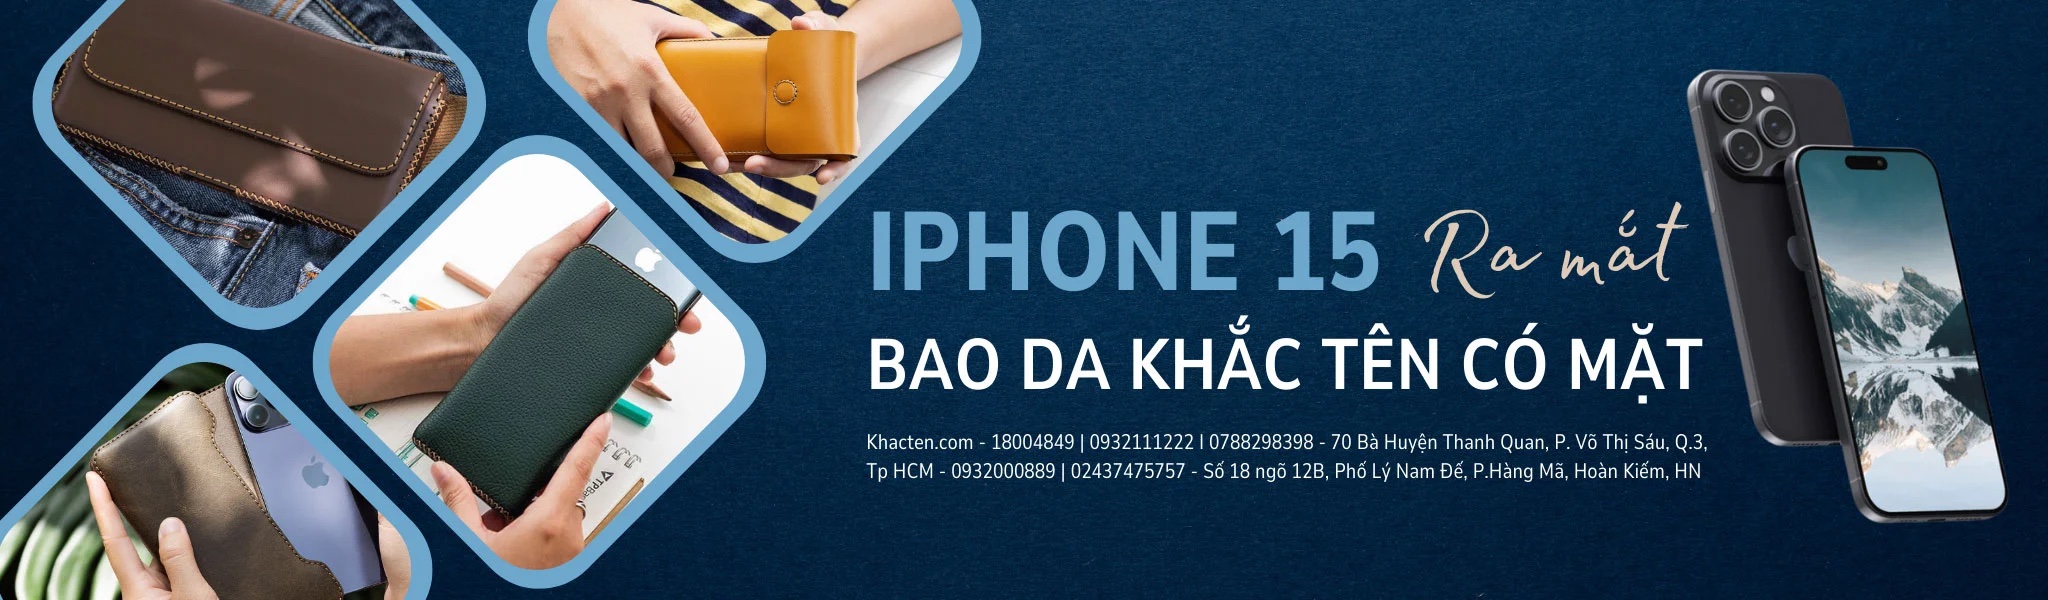 8114261-khacten-banner-iphone15.jpeg